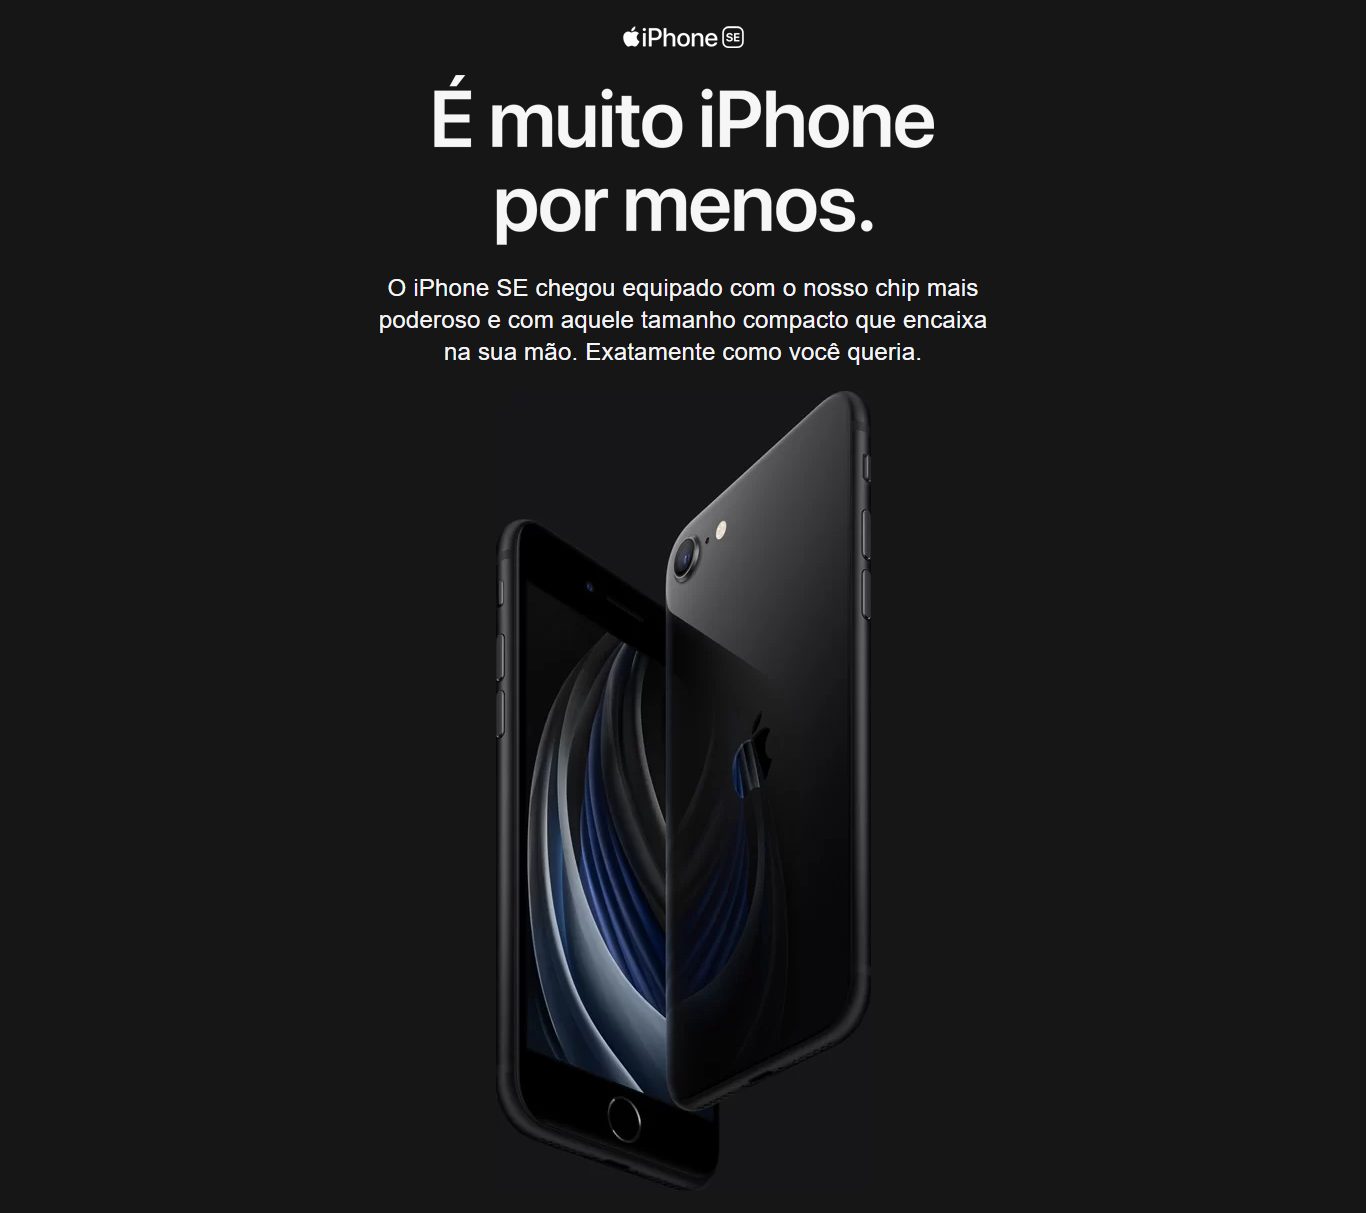  iPhone SE Apple Preto 64GB Desbloqueado - MX9R2BZ/A 